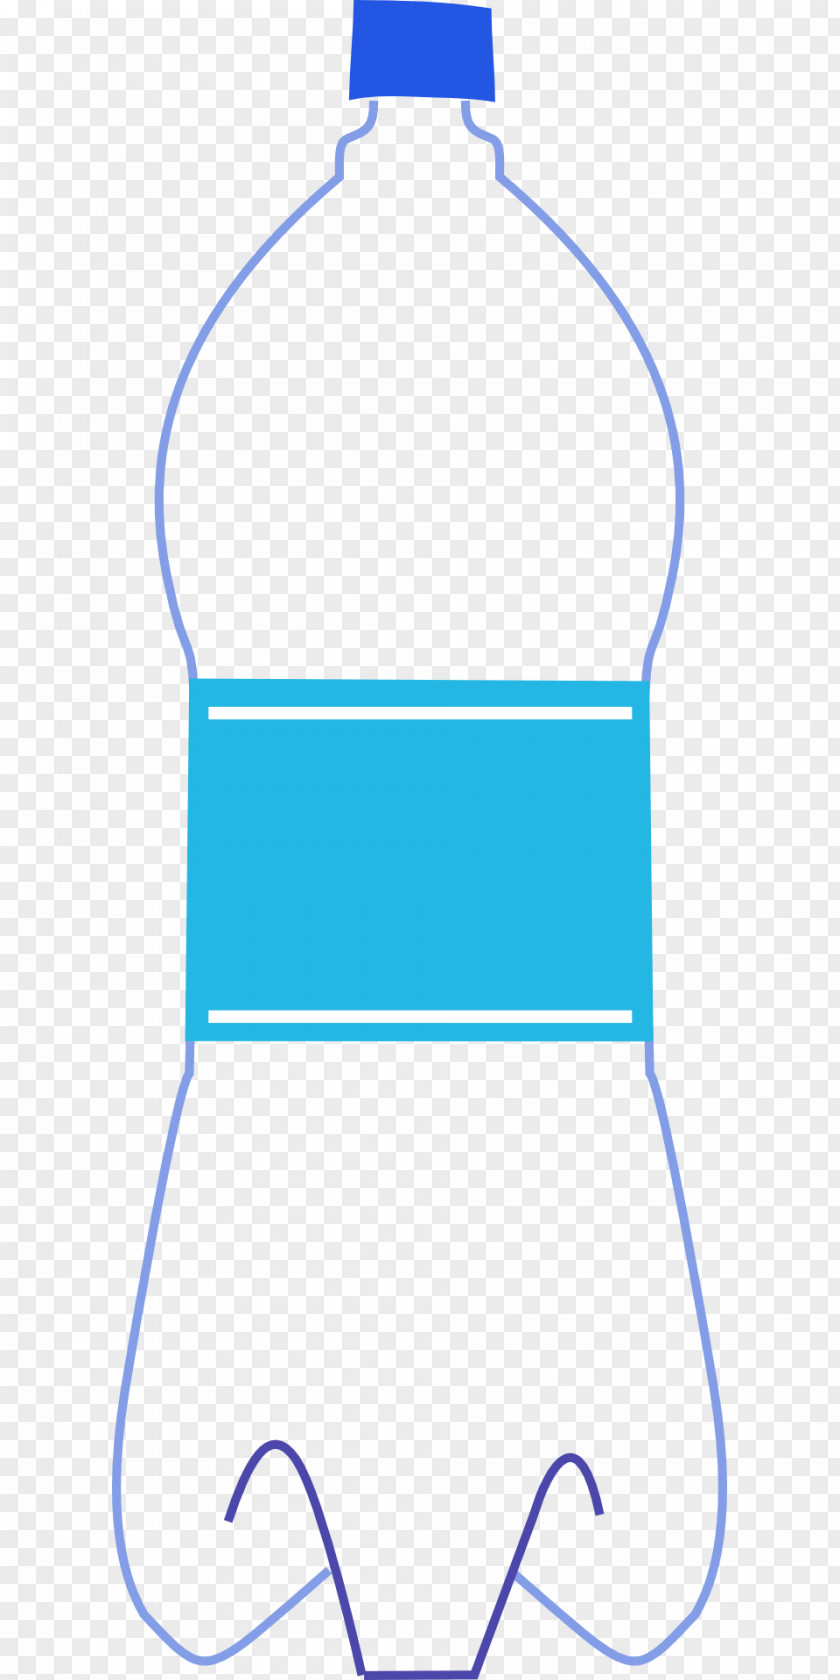 Water Bottle Plastic Bag Clip Art PNG